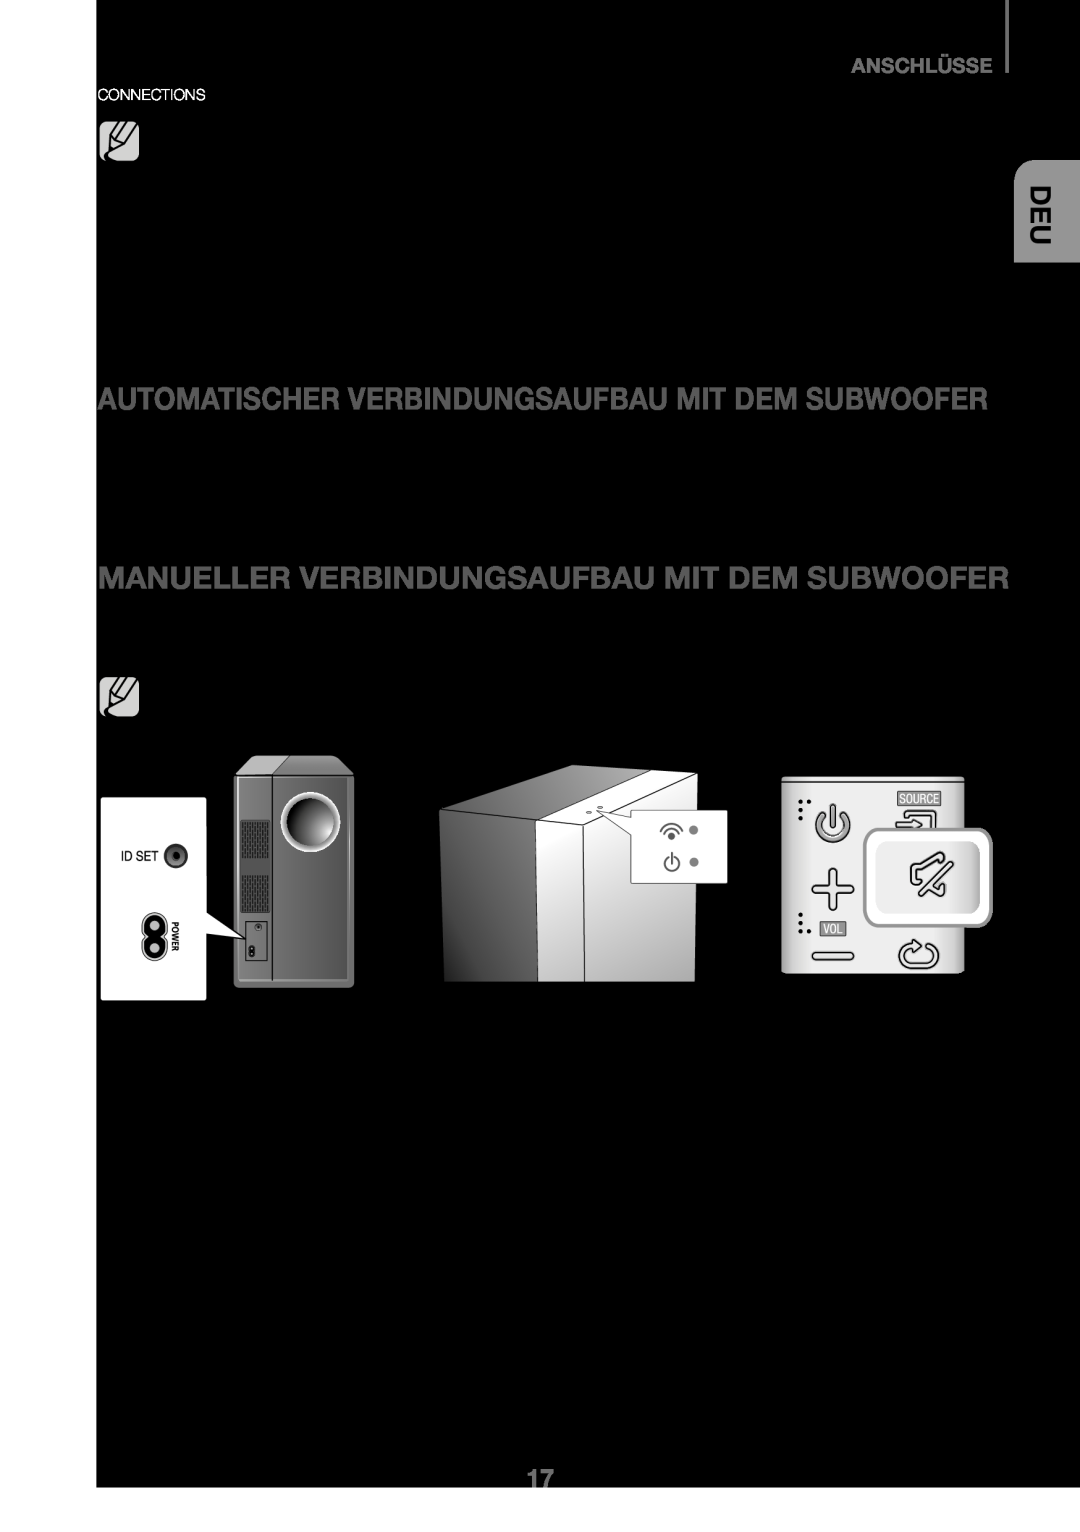 Samsung HW-K450/ZF, HW-K450/EN manual Anschliessen Des Subwoofers, Manueller Verbindungsaufbau Mit Dem Subwoofer, Anschlüsse 